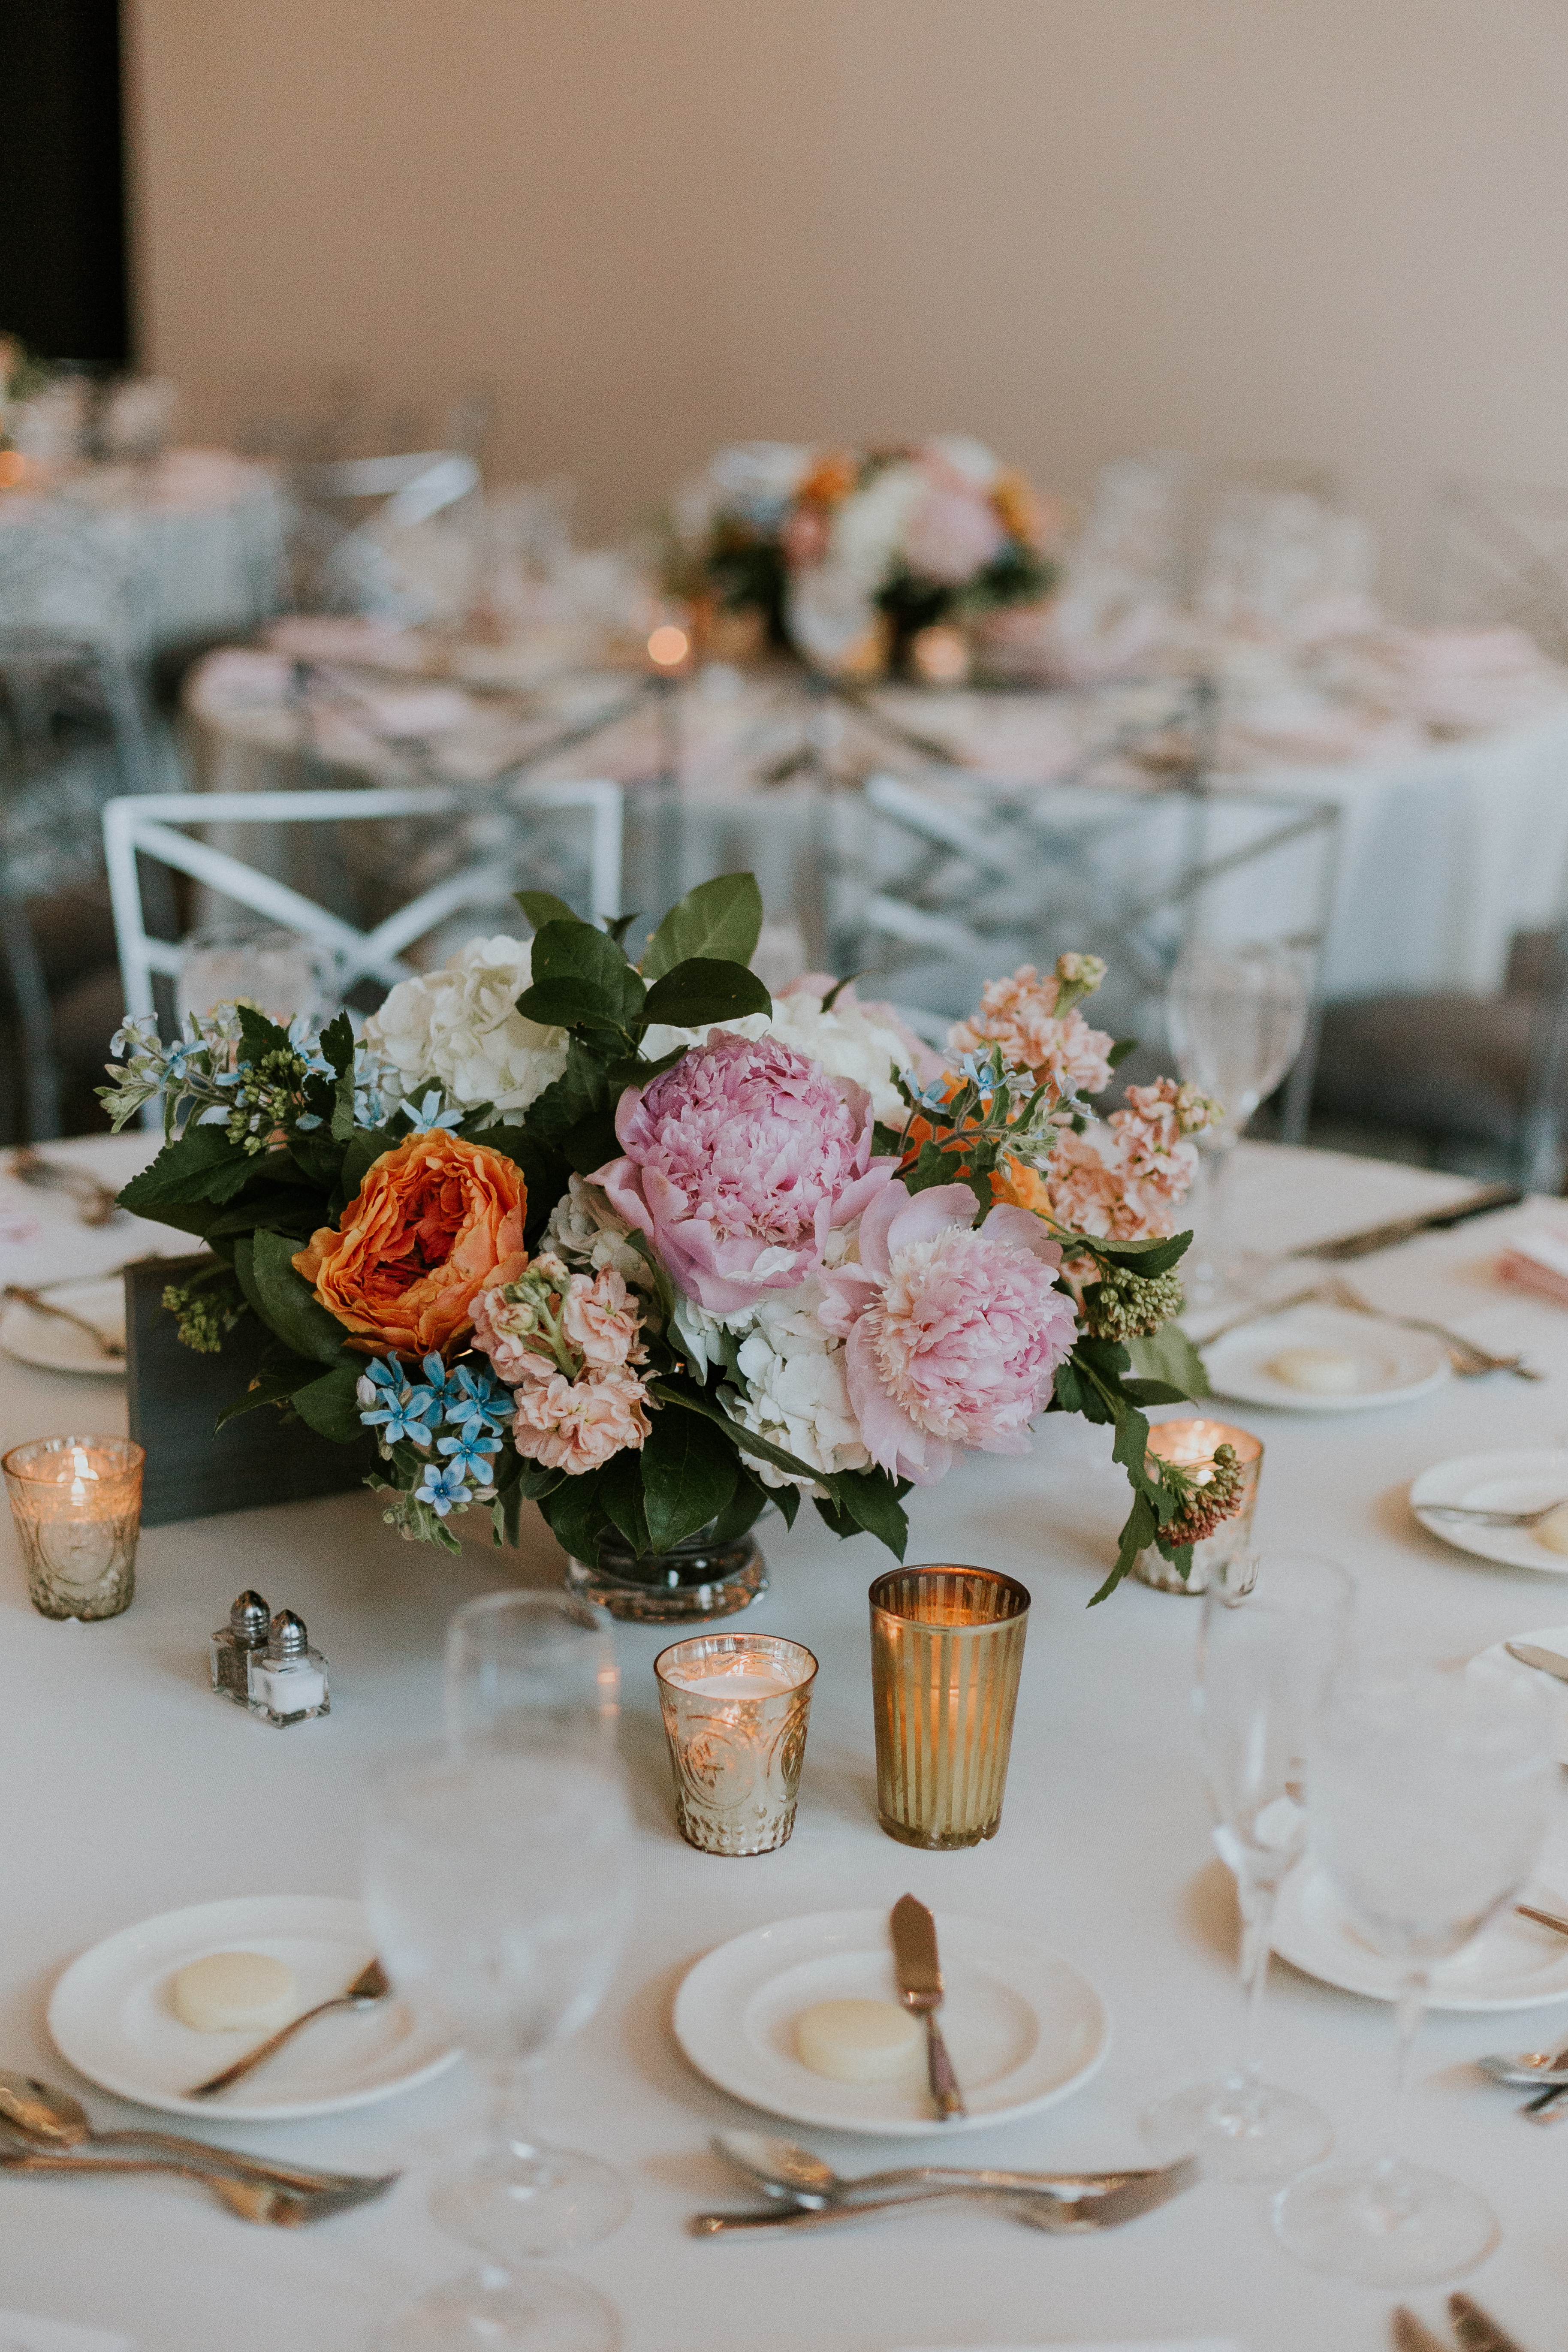 Lush summer wedding centerpieces with orange roses, pink peonies, stock, and tweedia.